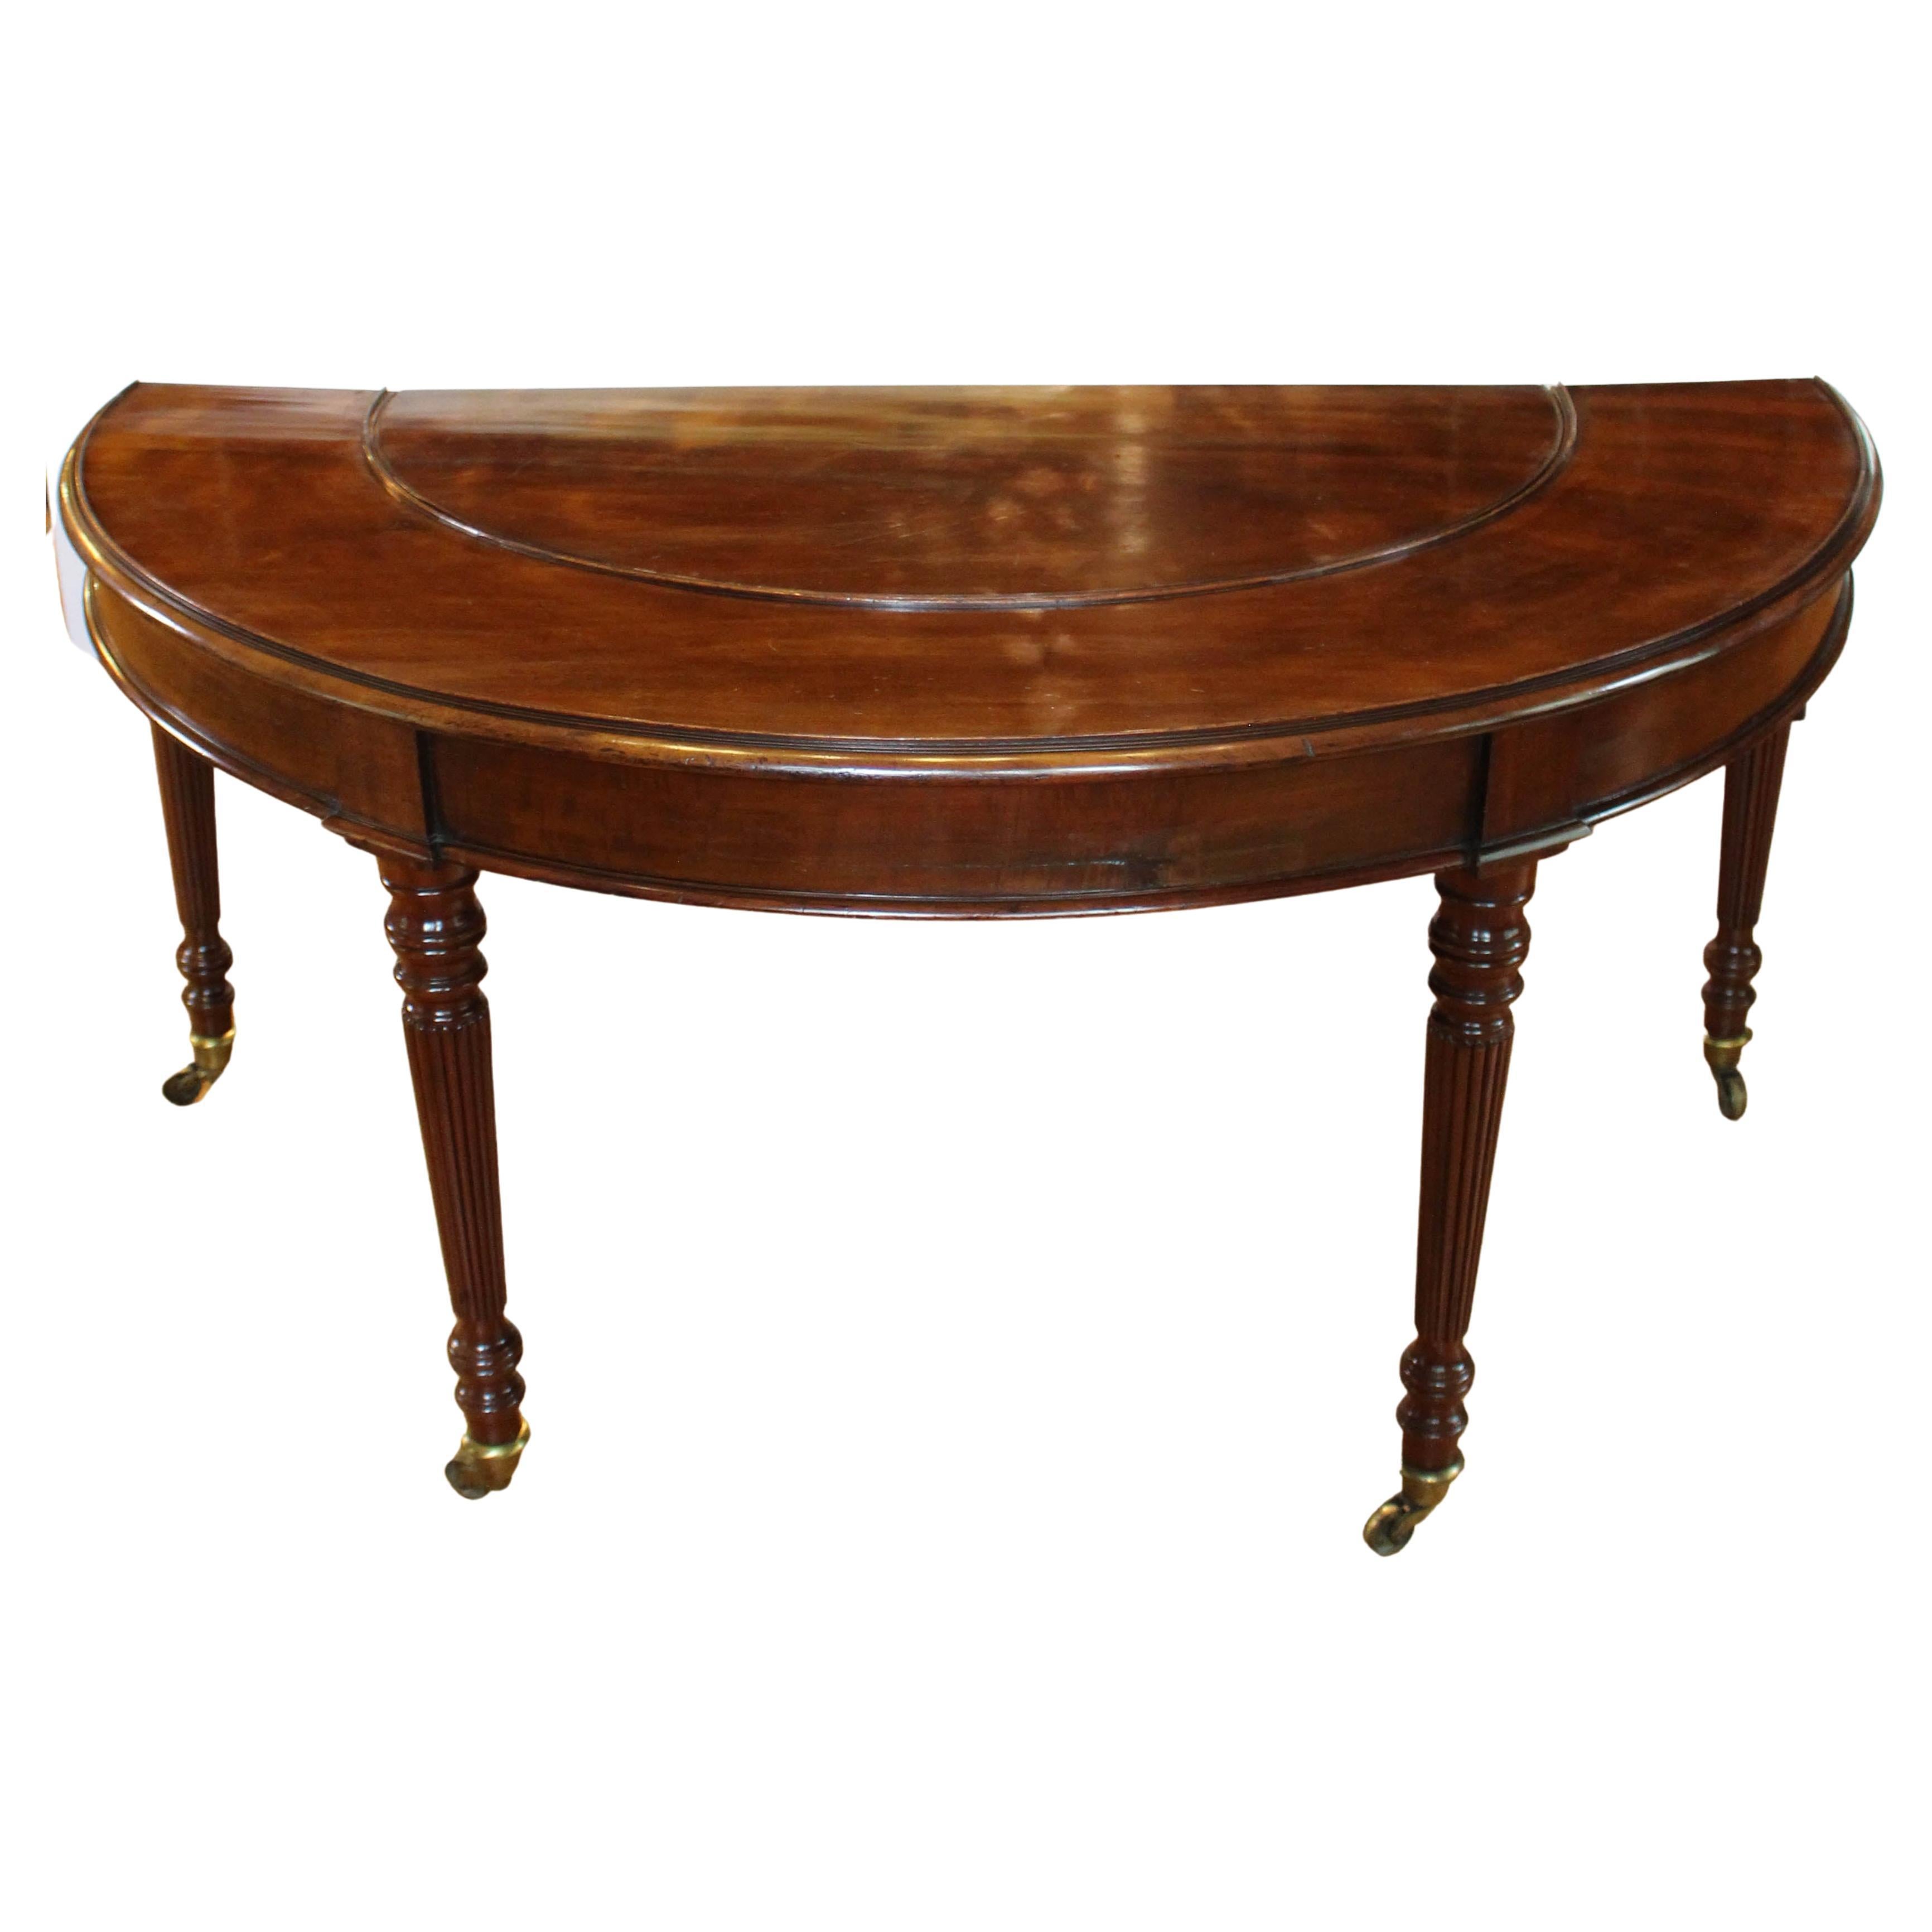 Circa 1825 Rare Form English Drinking Table (table à boire)